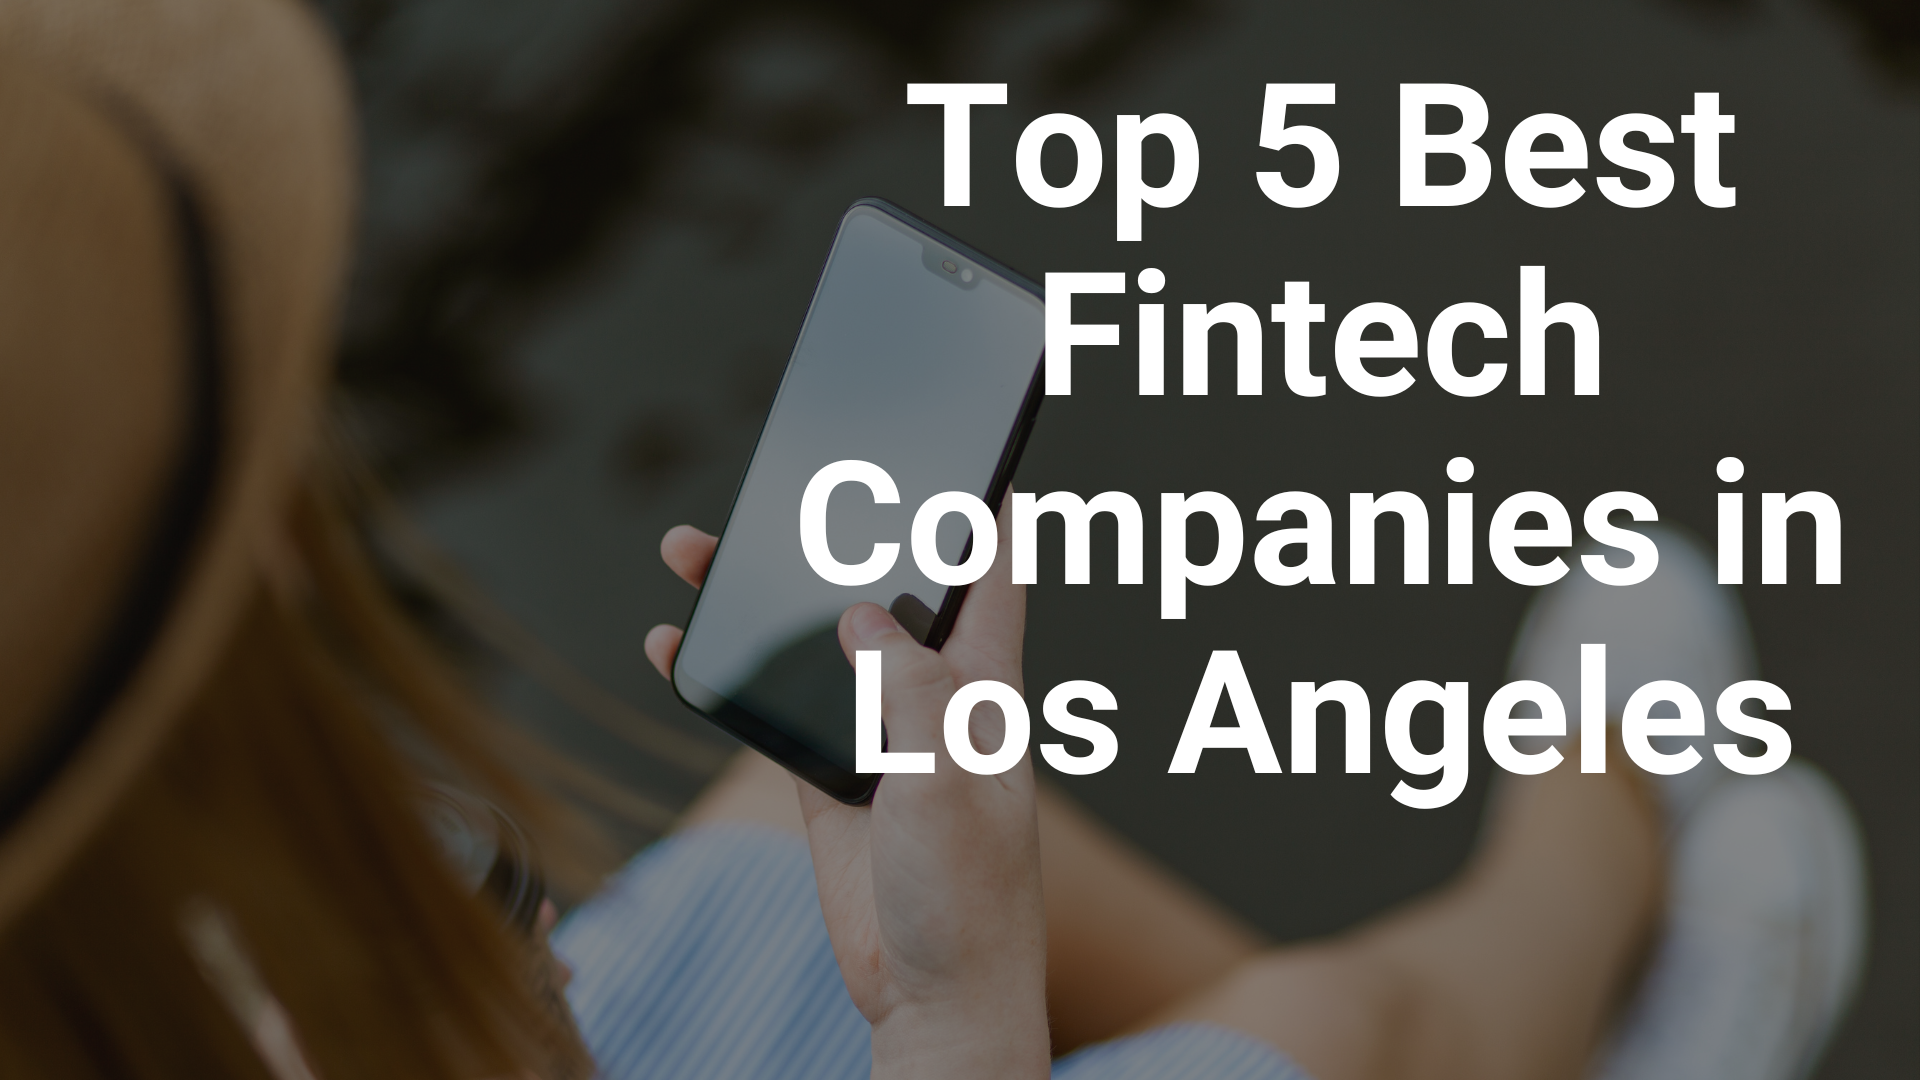 Top 5 Best Fintech Companies in Los Angeles